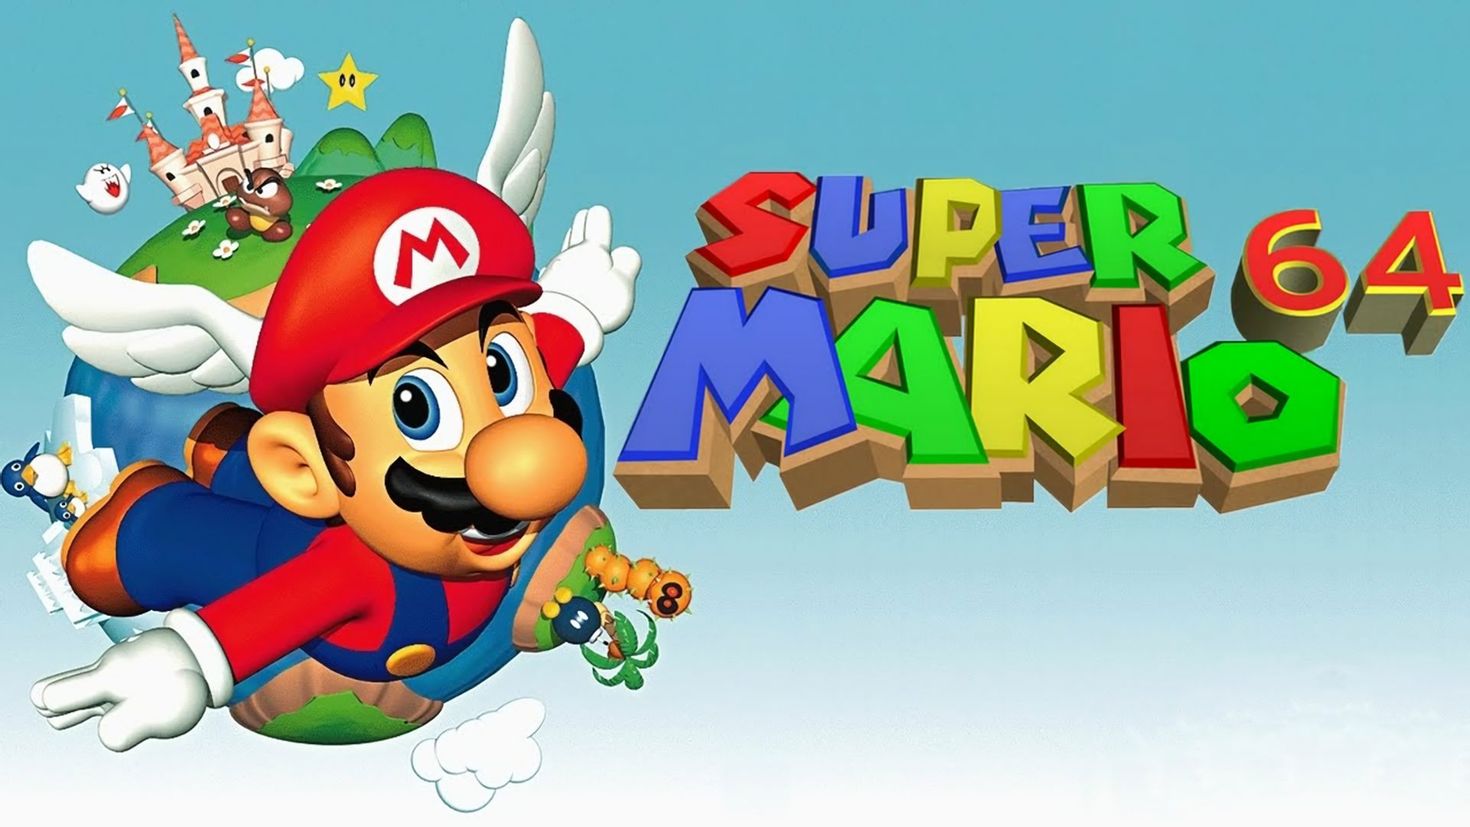 Супер Марио Нинтендо 64